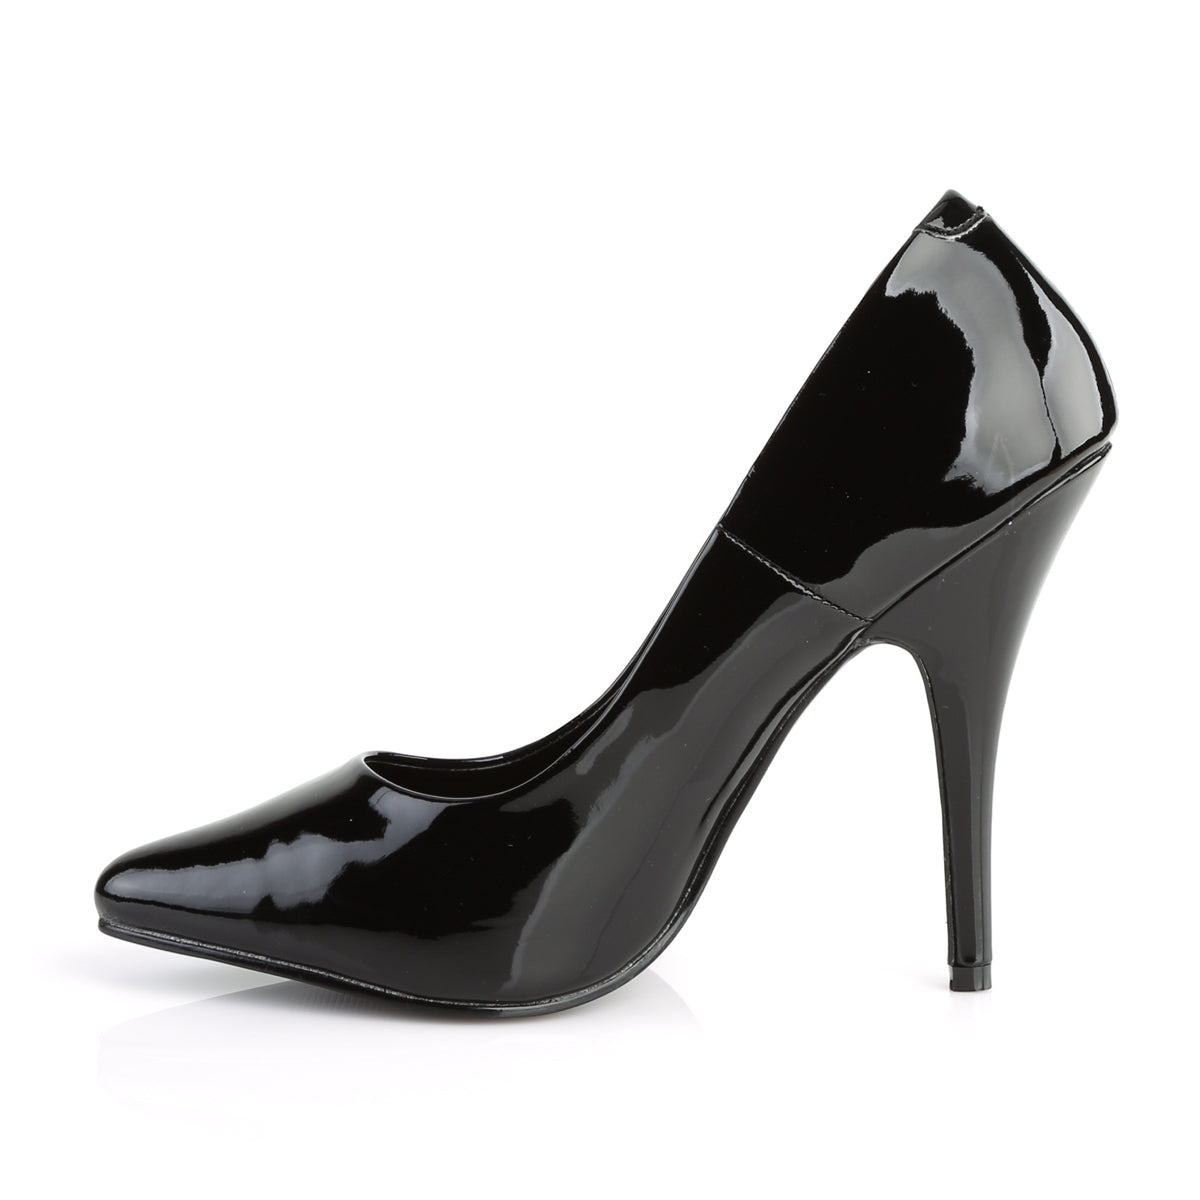 SEDUCE-420 Sexy Shoes 5" Heel Black Patent Fetish Footwear-Pleaser- Sexy Shoes Pole Dance Heels